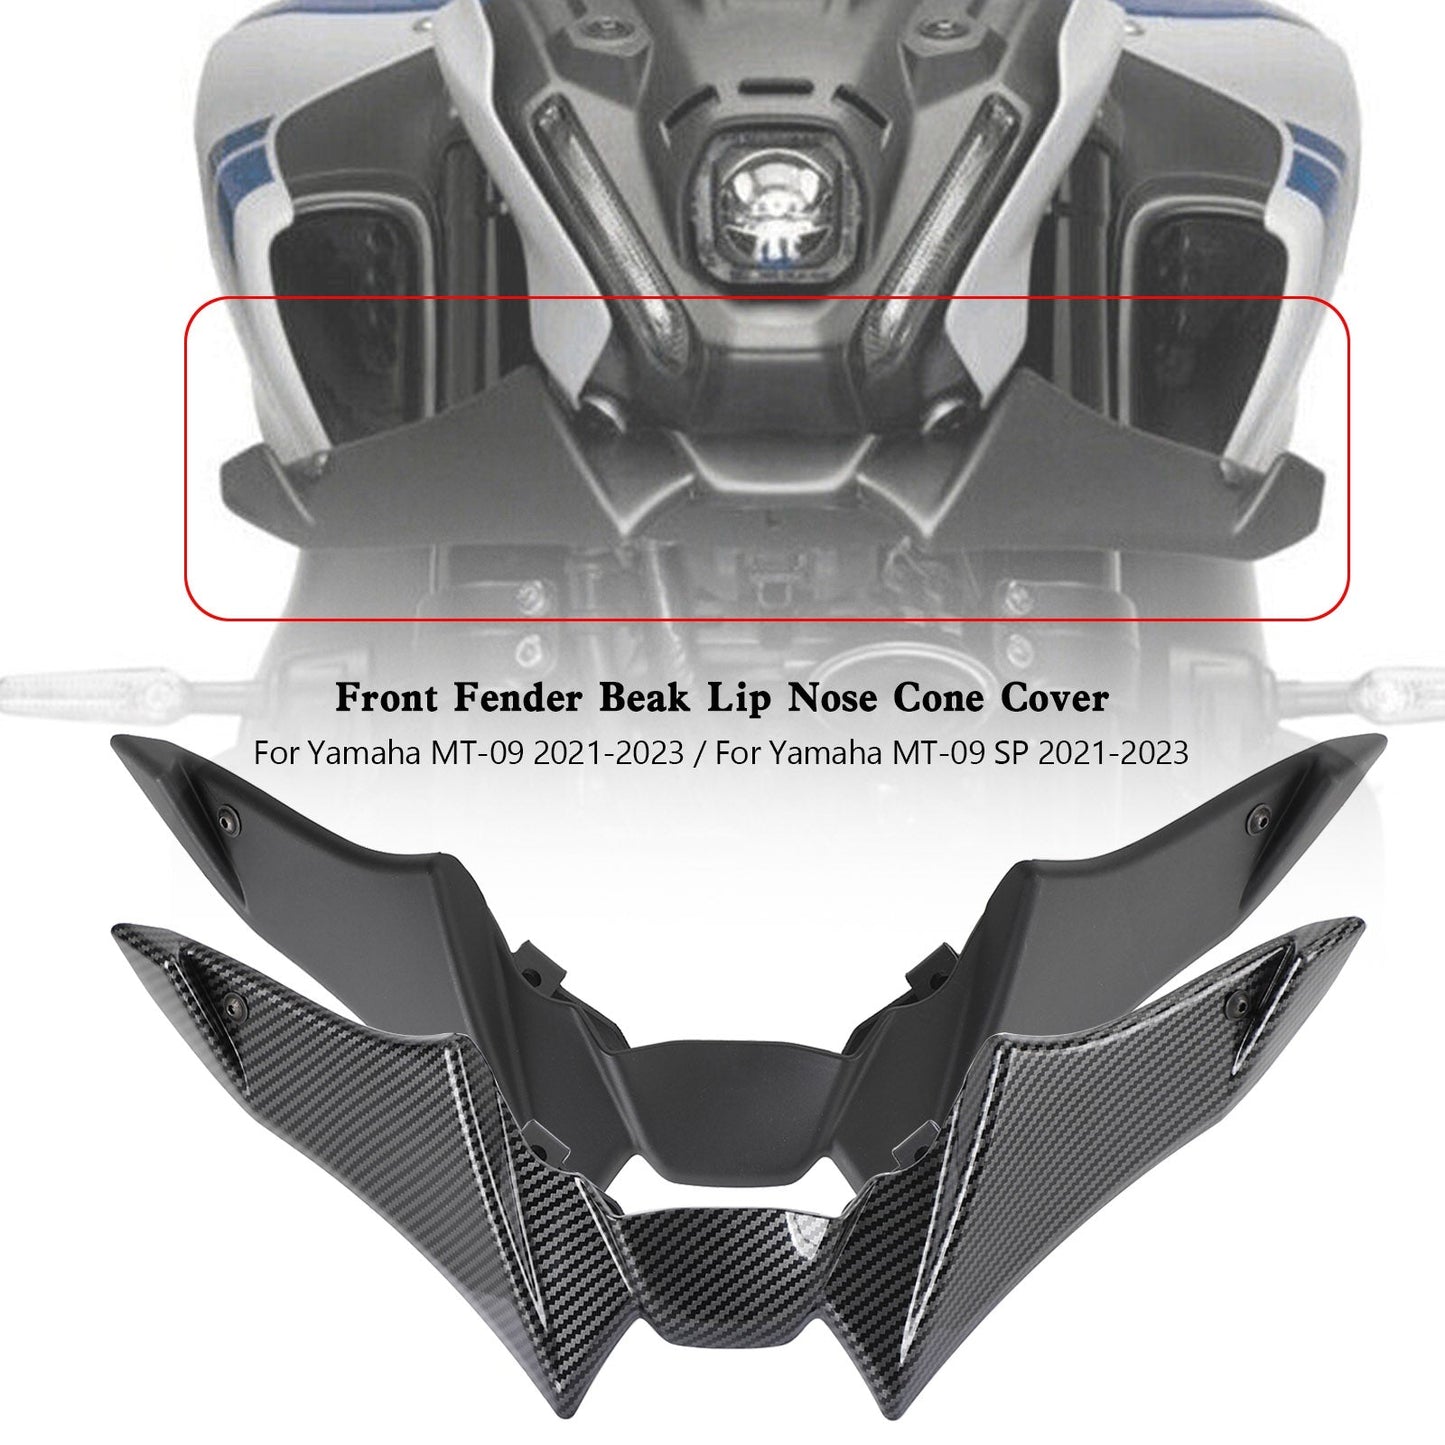 Yamaha MT-09 (SP) 2021-2023 Front Fender Beak Lip Nose Cone Cover Spoilers